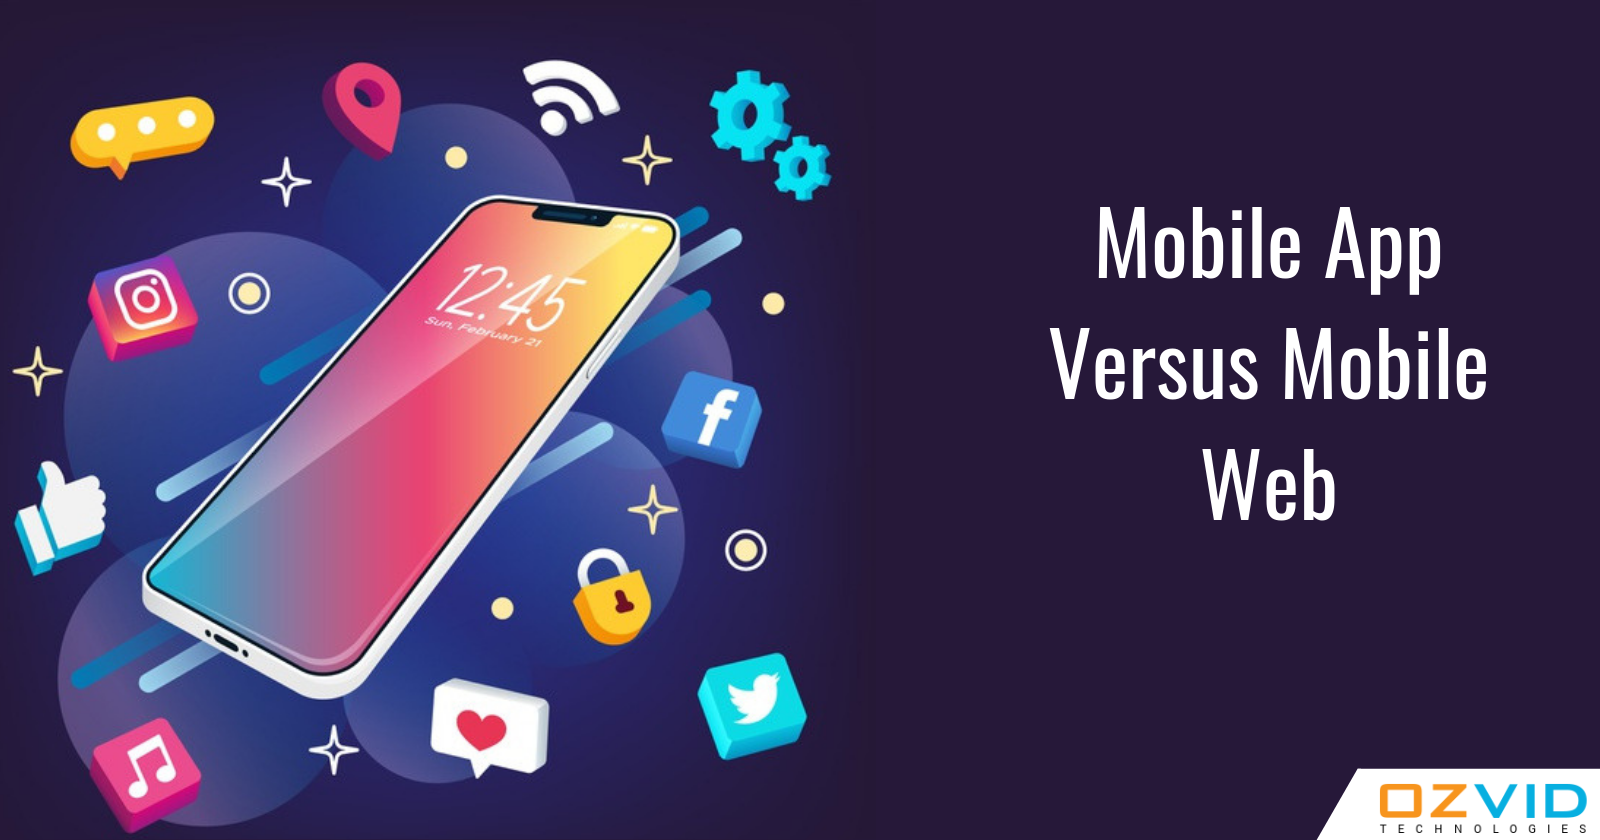 What Make Mobile Apps Better Than Mobile Website?